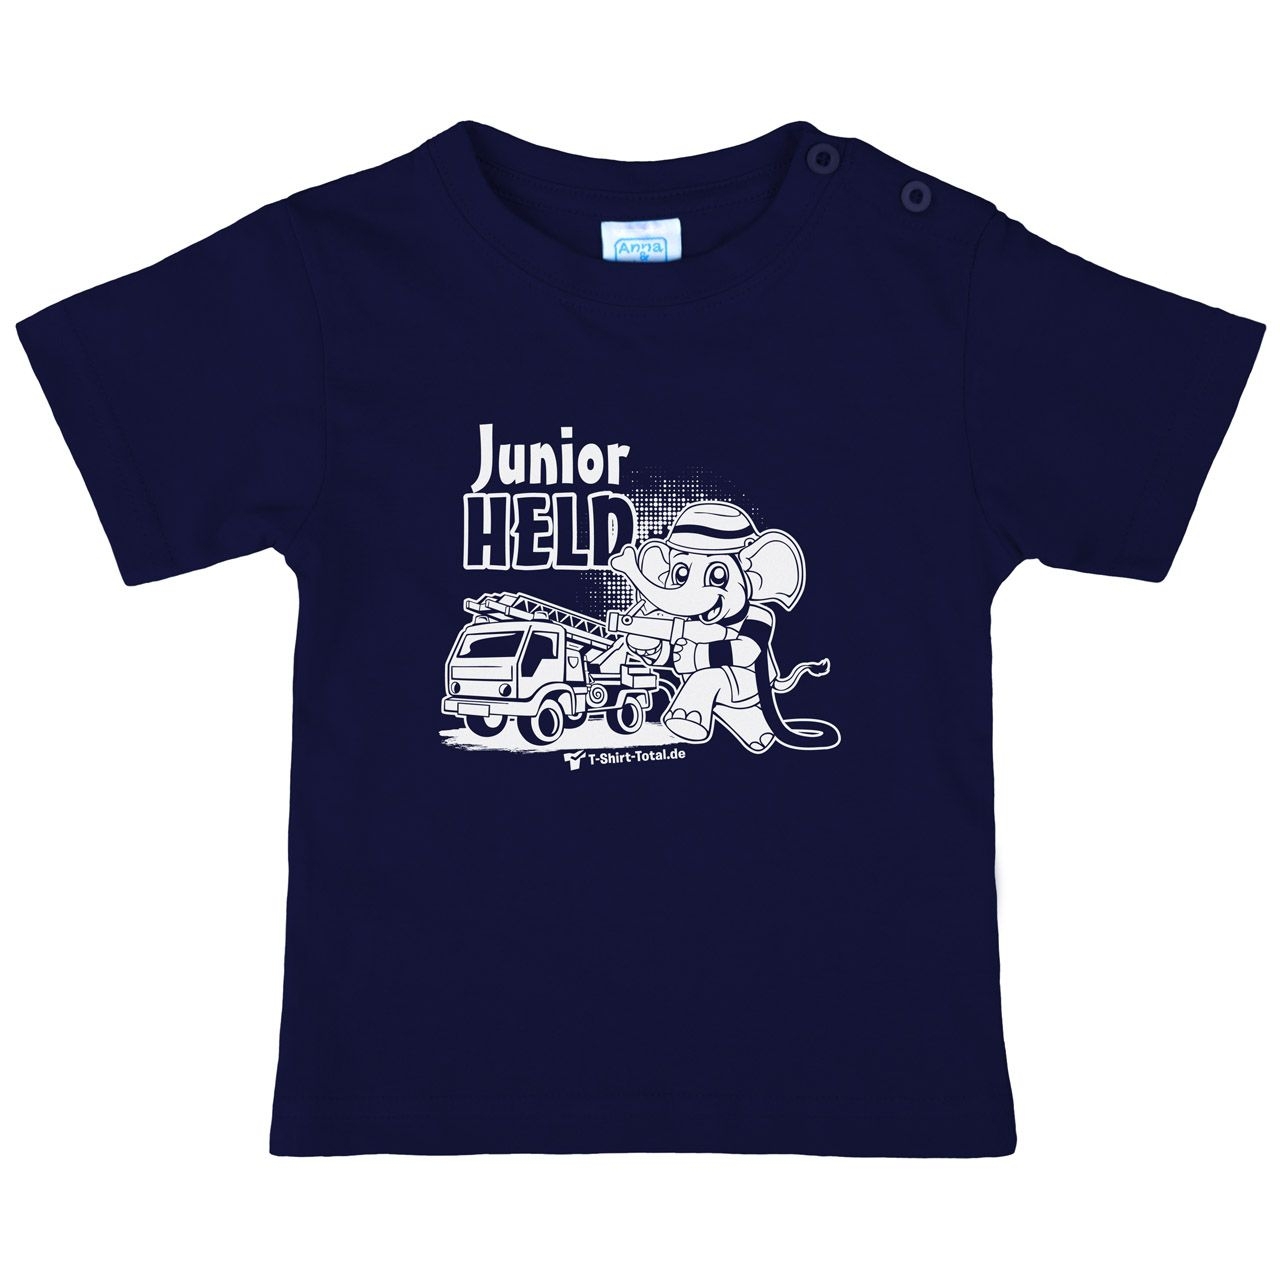 Junior Held Feuerwehr Kinder T-Shirt navy 68 / 74